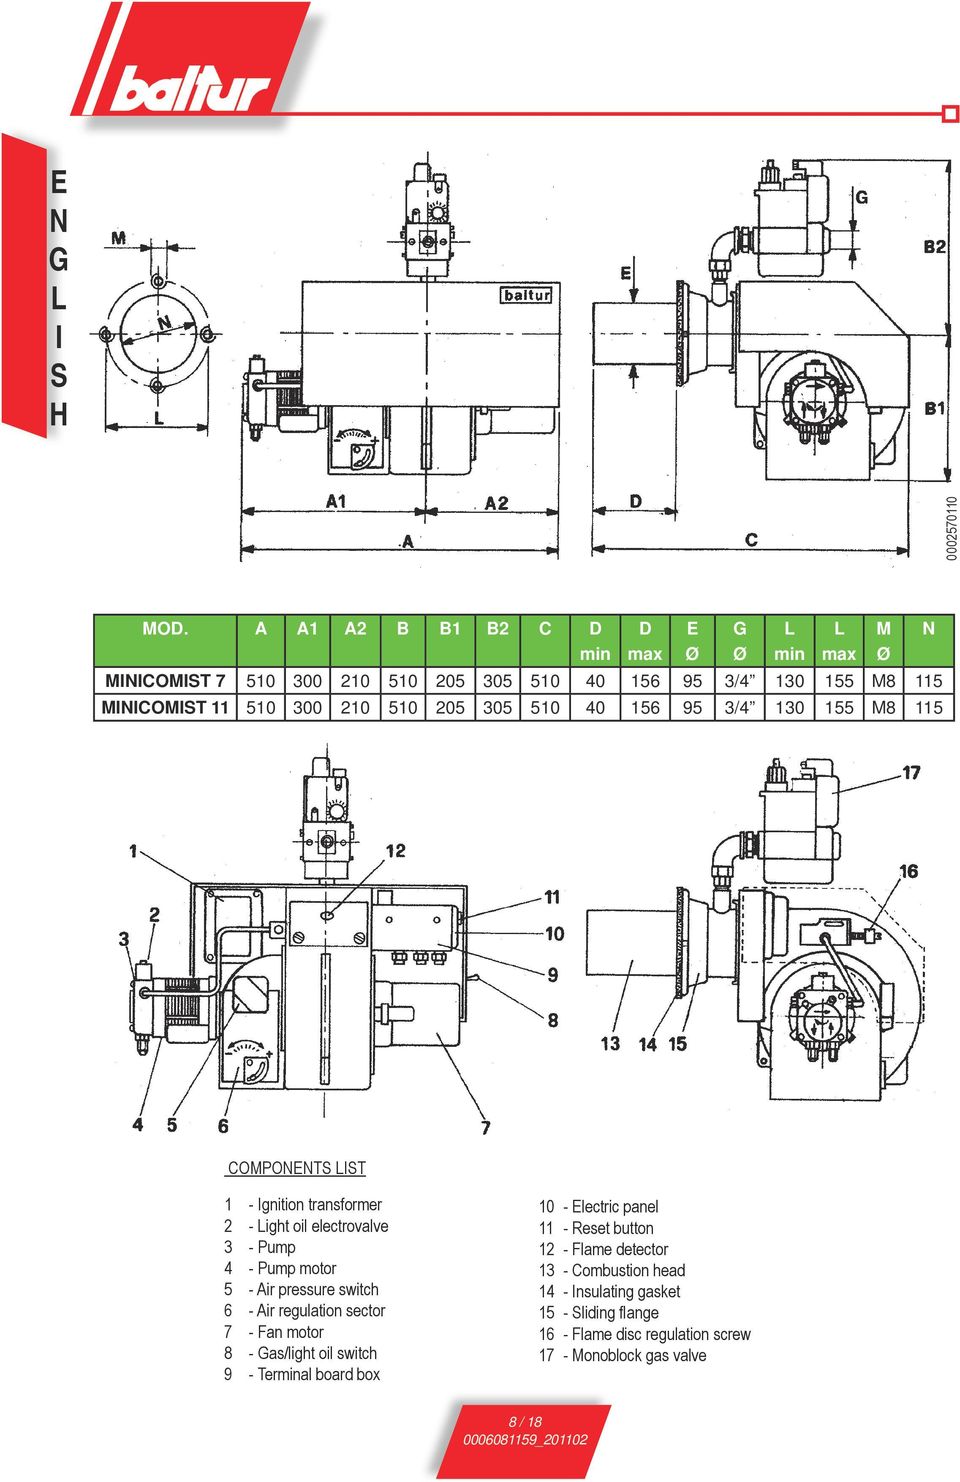 130 155 M8 115 D max E Ø G Ø min max M Ø N COMPONENTS IST 1 - Ignition transformer 2 - ight oil electrovalve 3 - Pump 4 - Pump motor 5 - Air pressure